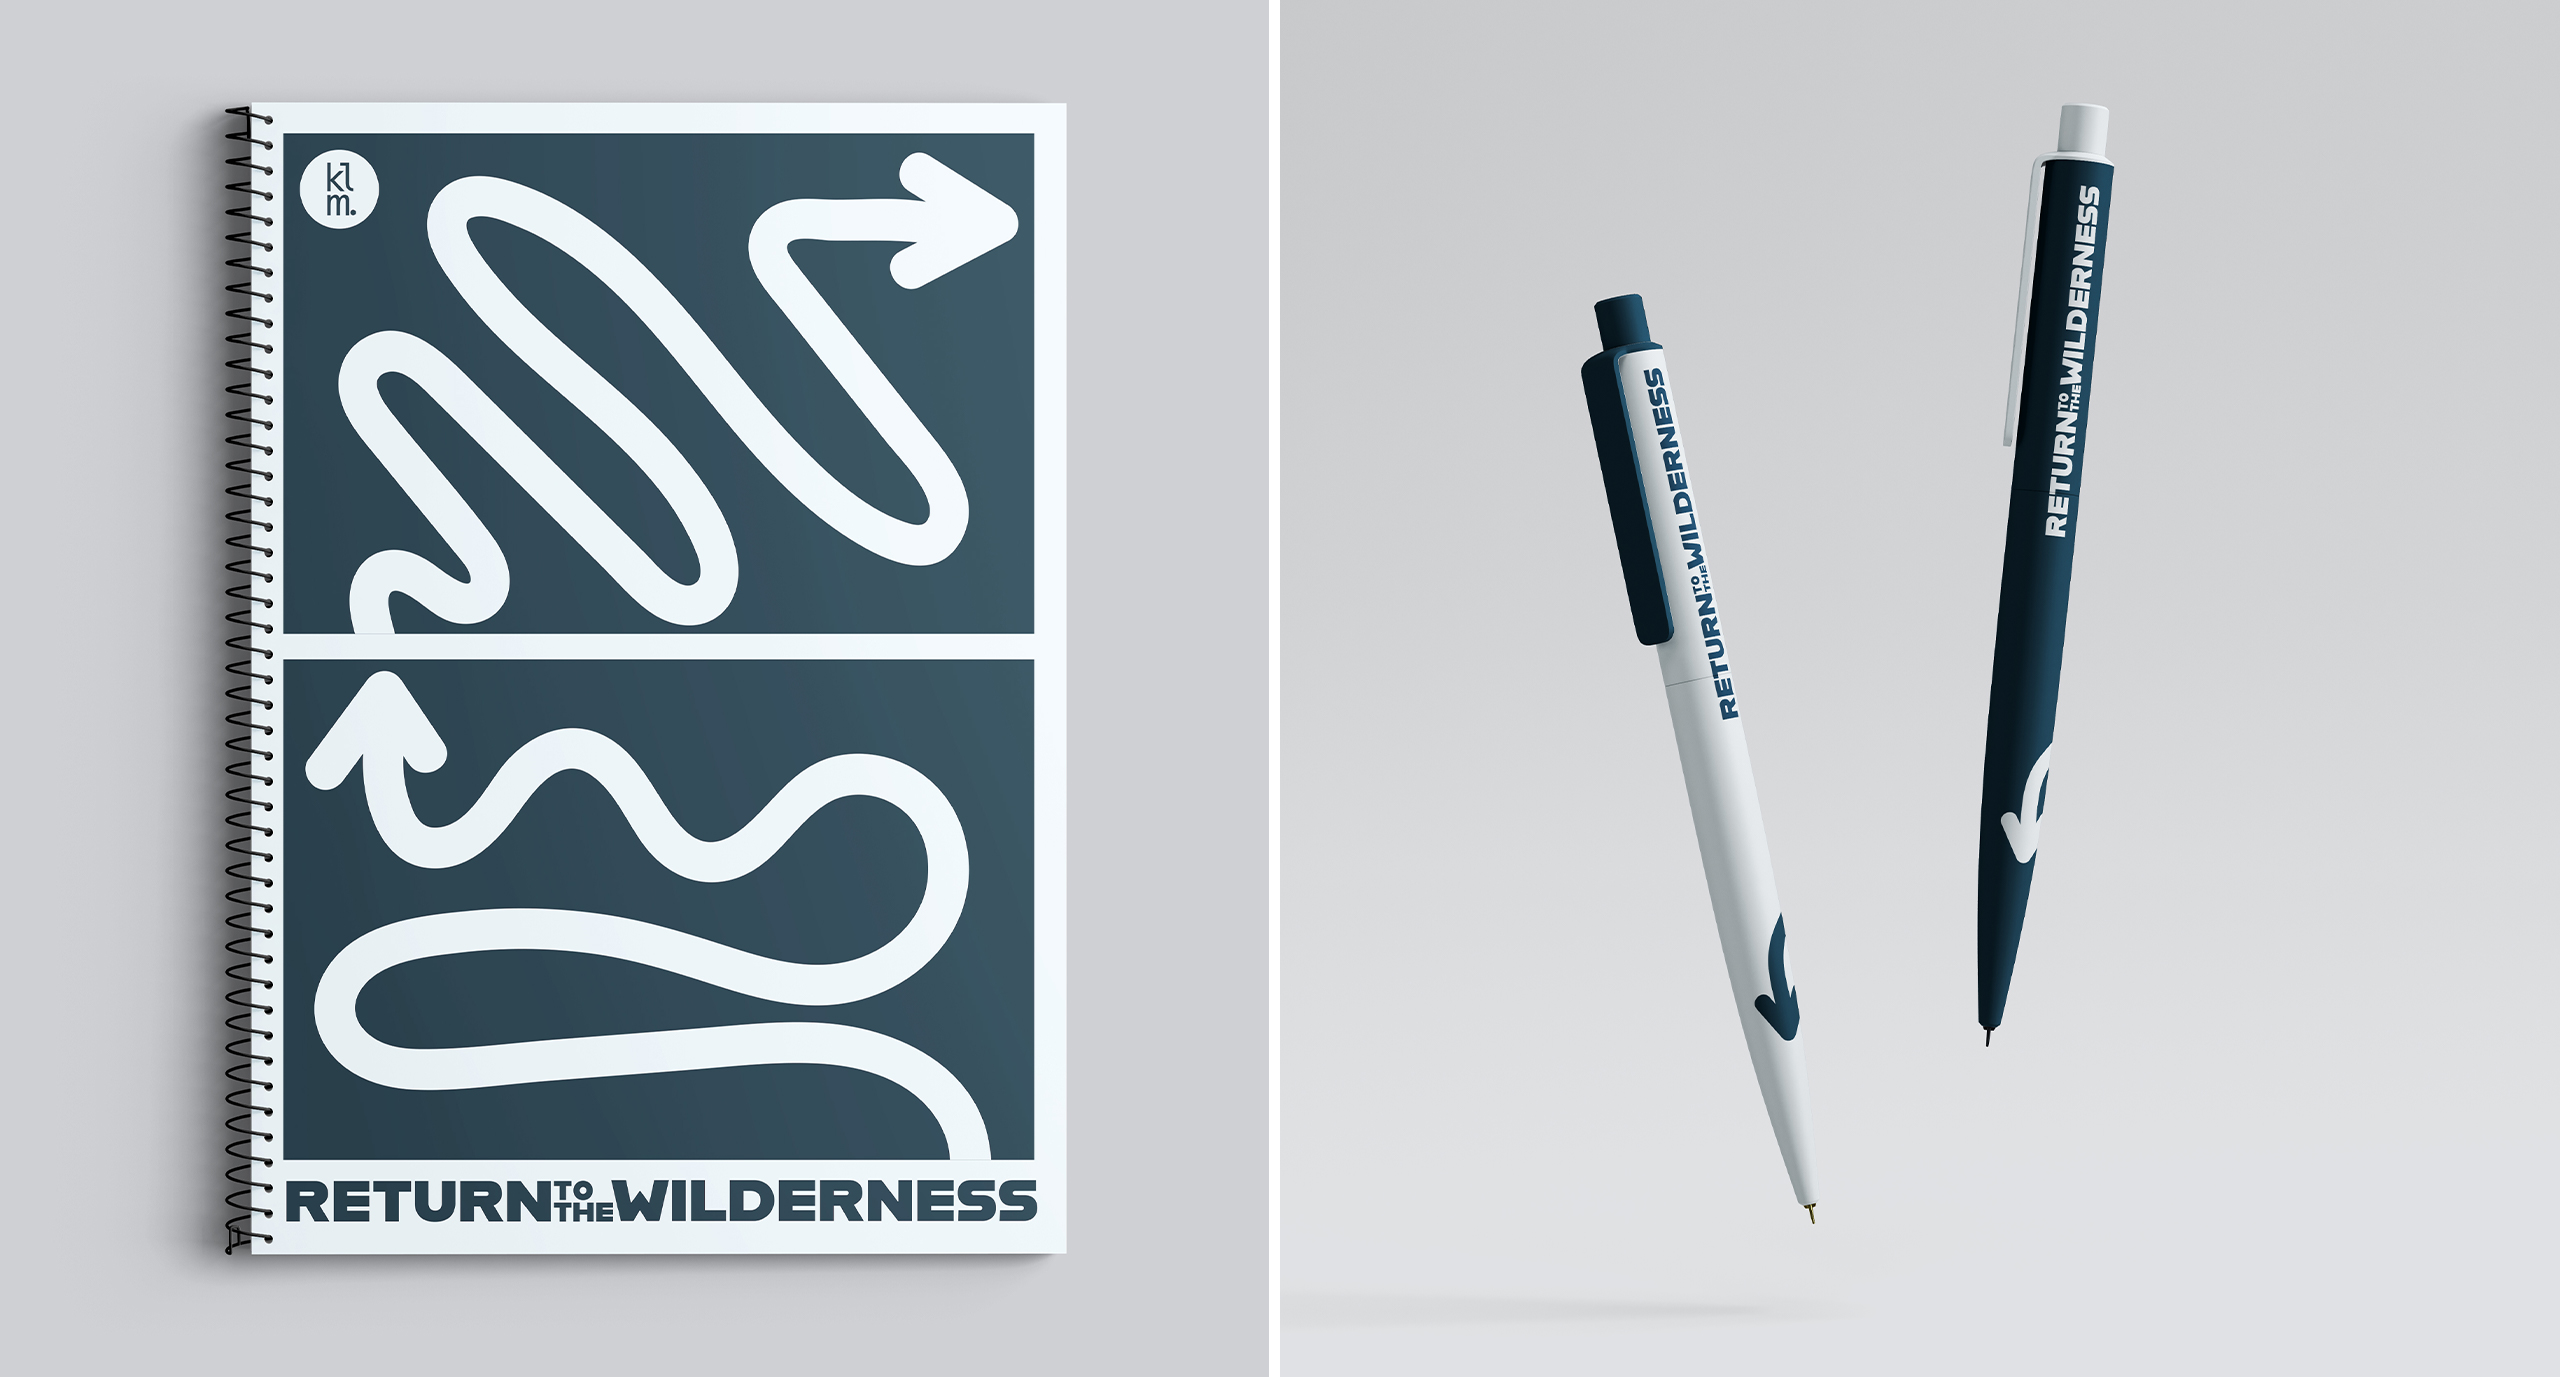 Tarek Nagy Graphic Design, Branding and Web Development - Return to the Wilderness Brisbane Melbourne Toronto